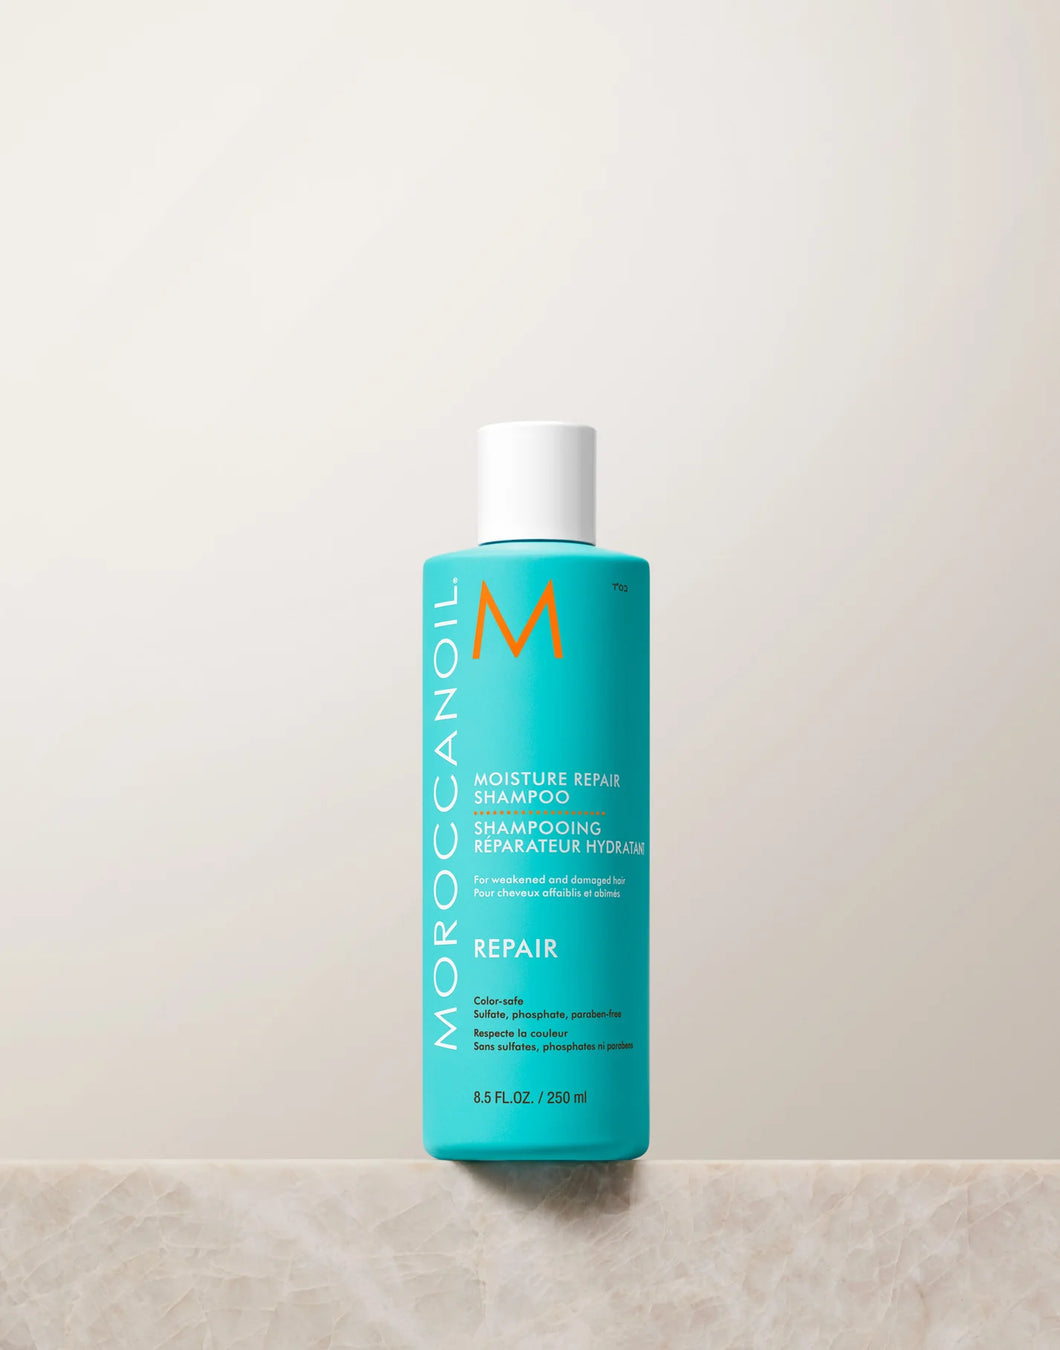 Moisture Repair Shampoo - For weakened and damaged hair